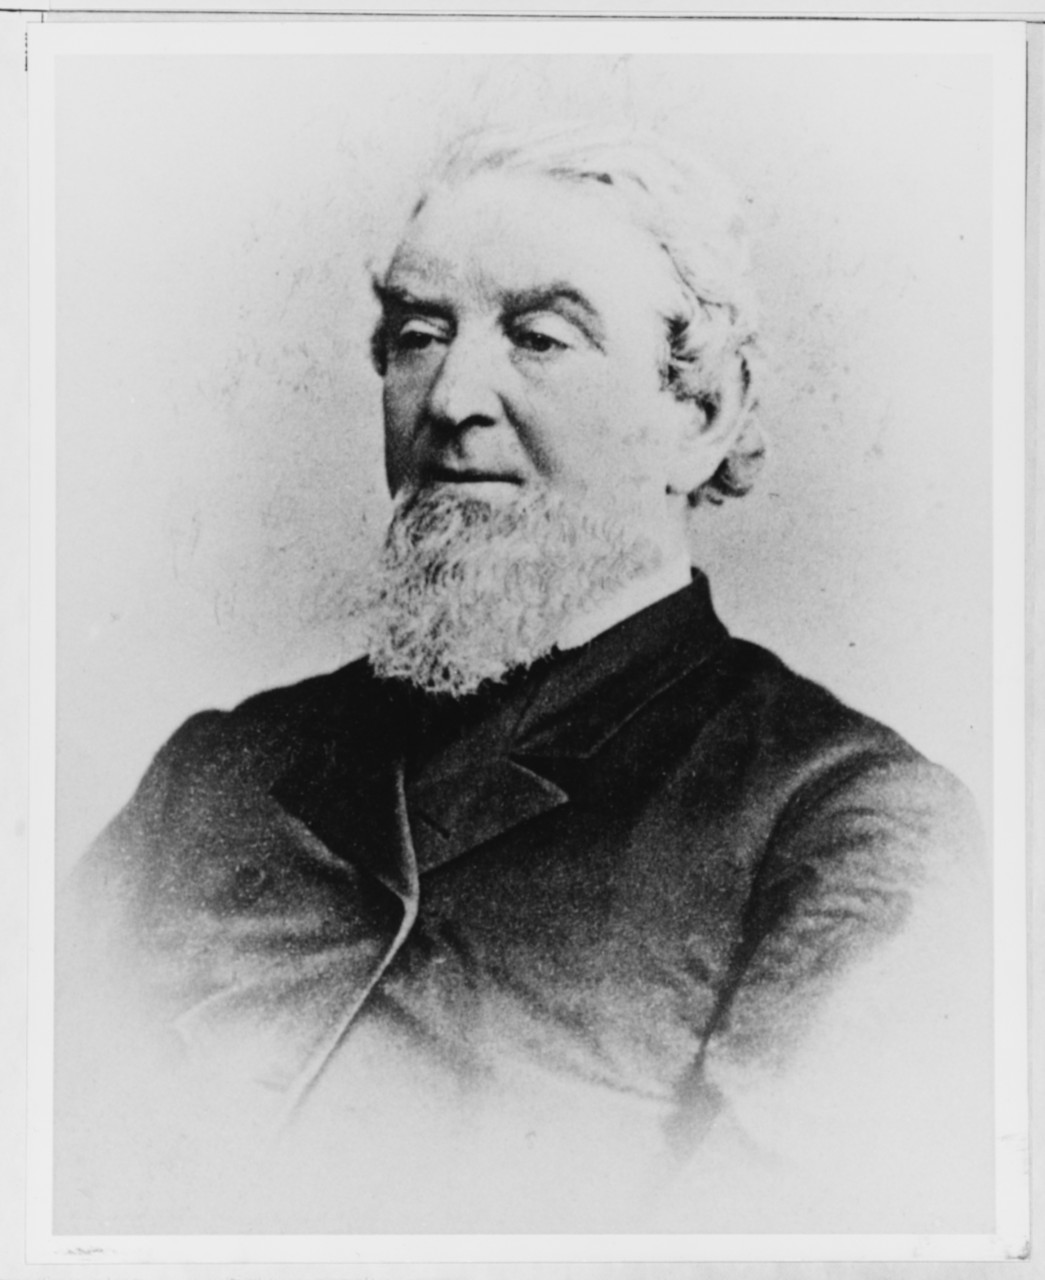 William S. Bishop, USN